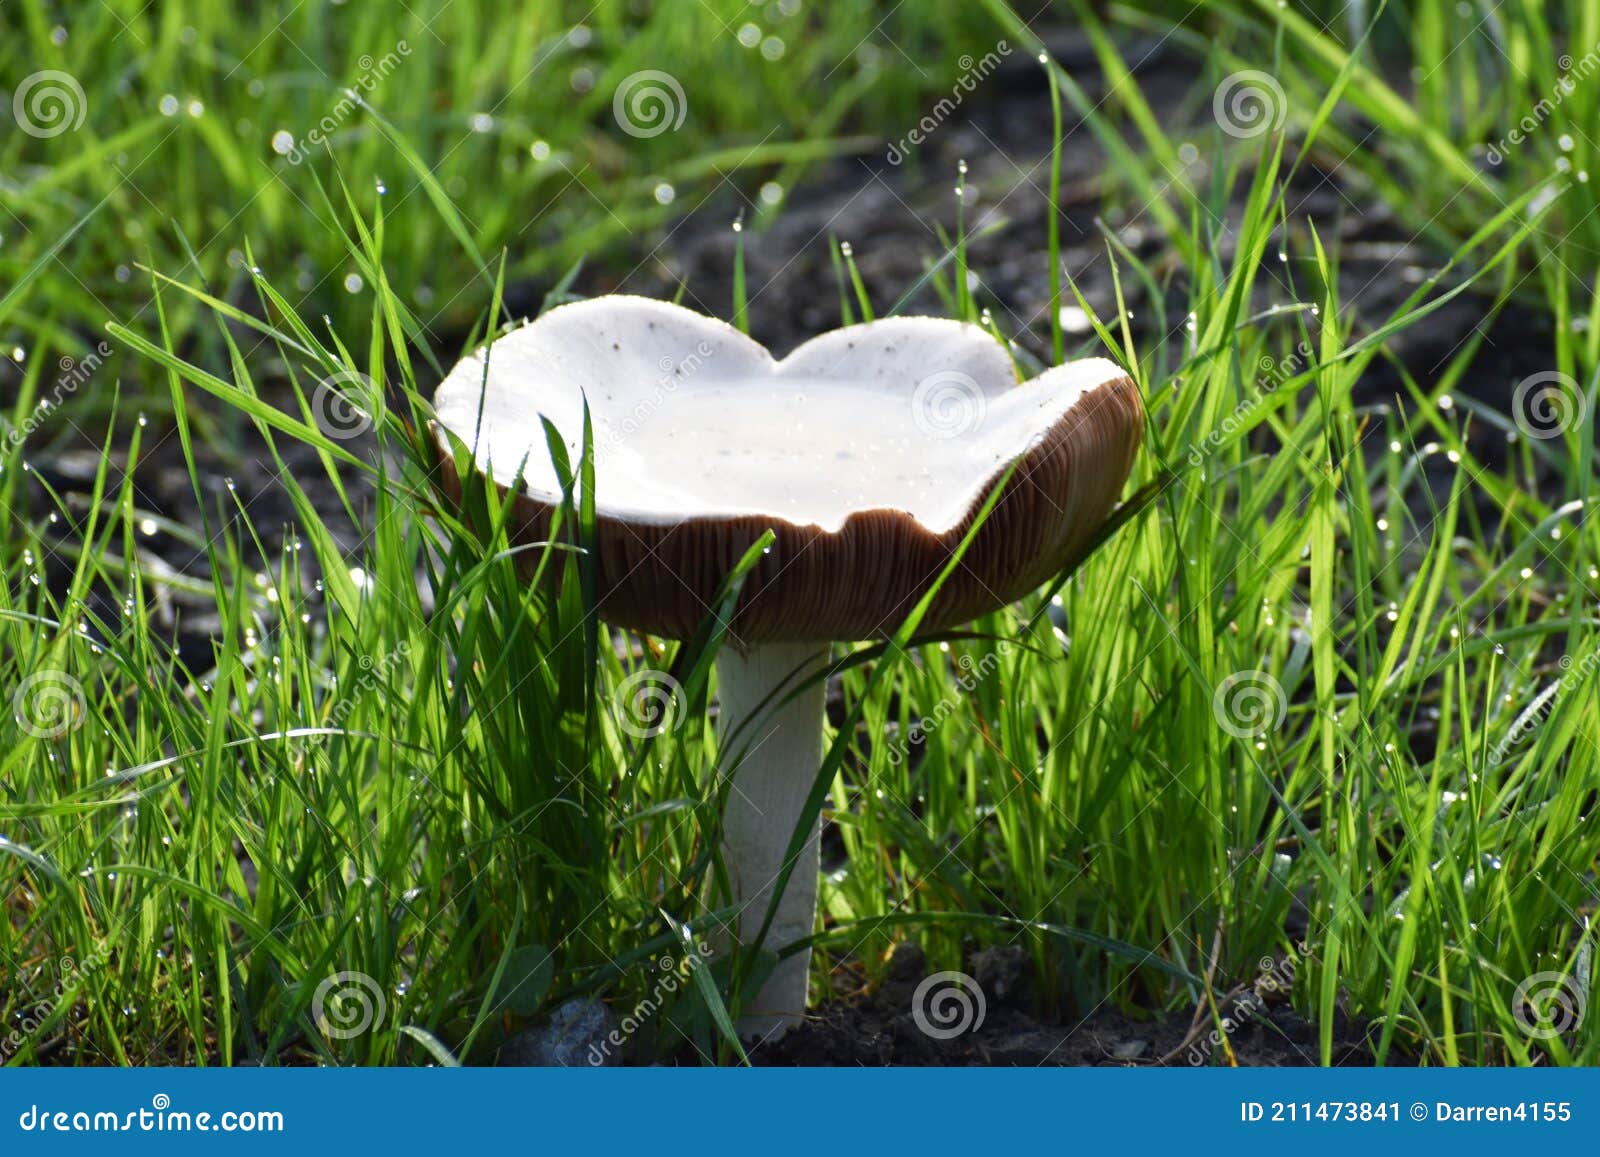 Huge Poisonous Death Cap Mushroom in Northern California Stock Image ...